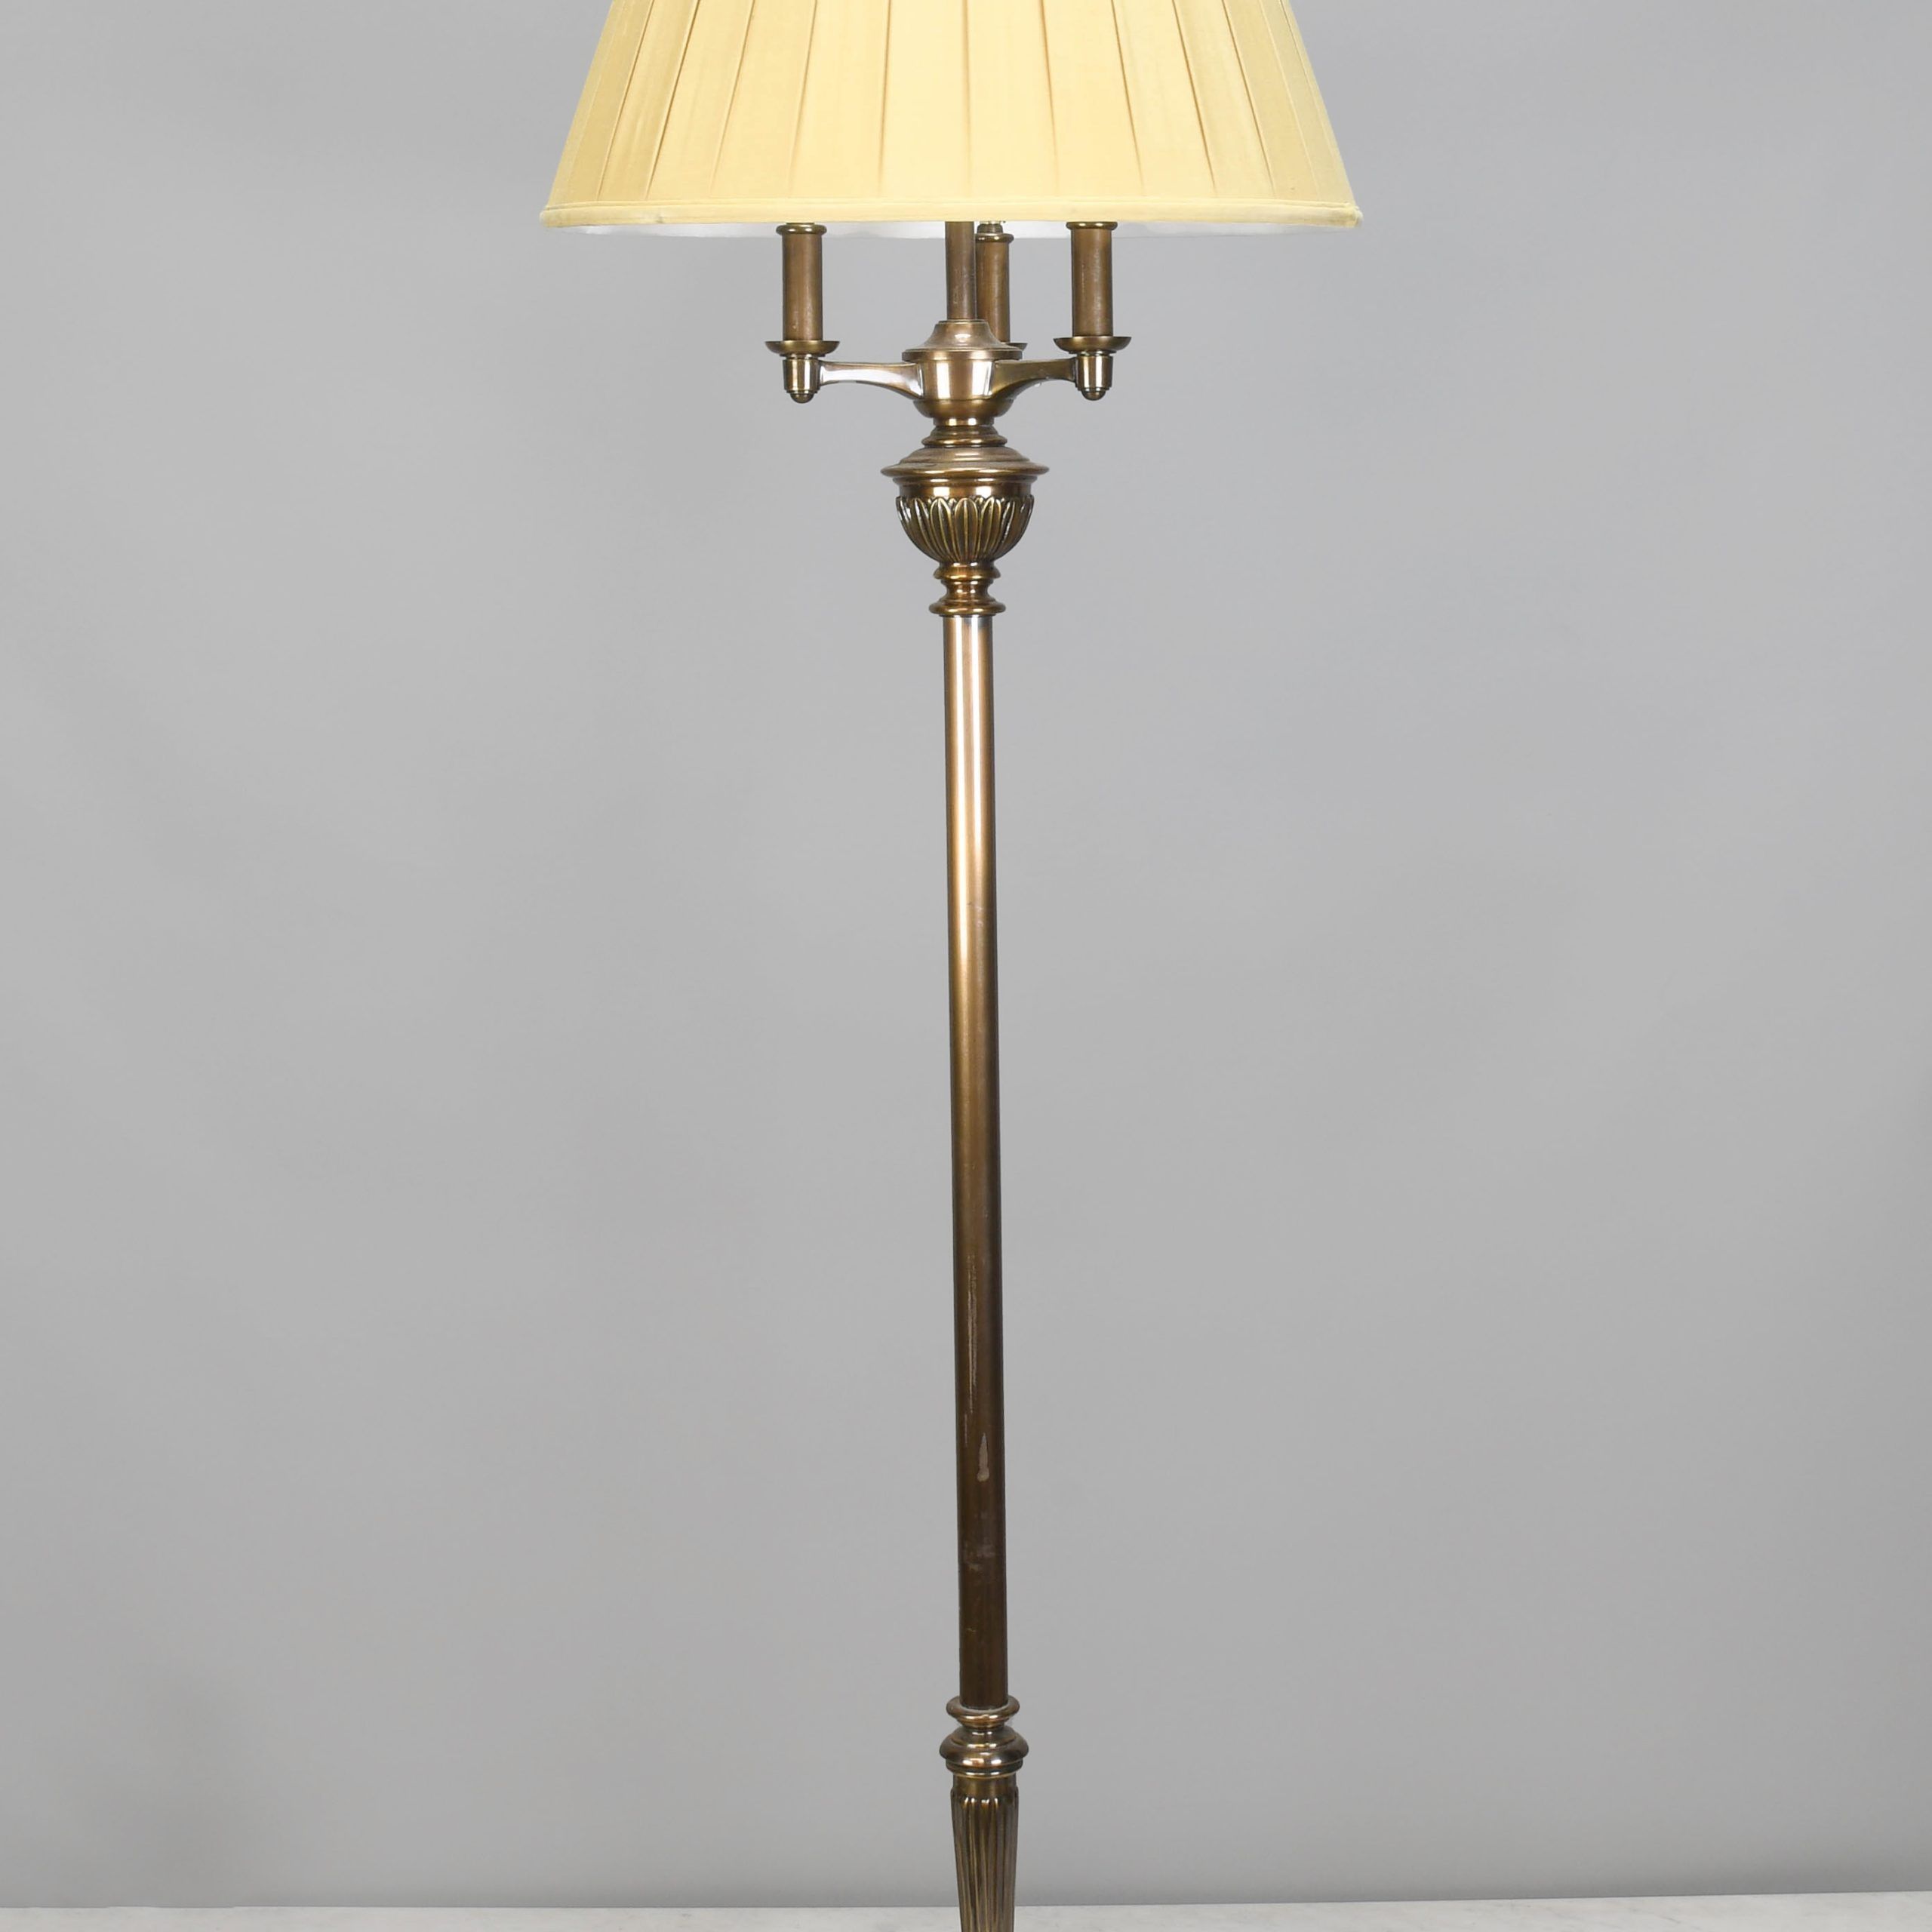 Three Candle Antique Brass Floor Lamp | Floor Lamps | Collection | City  Knickerbocker | Lighting Rentals Intended For Antique Brass Floor Lamps (Photo 9 of 15)